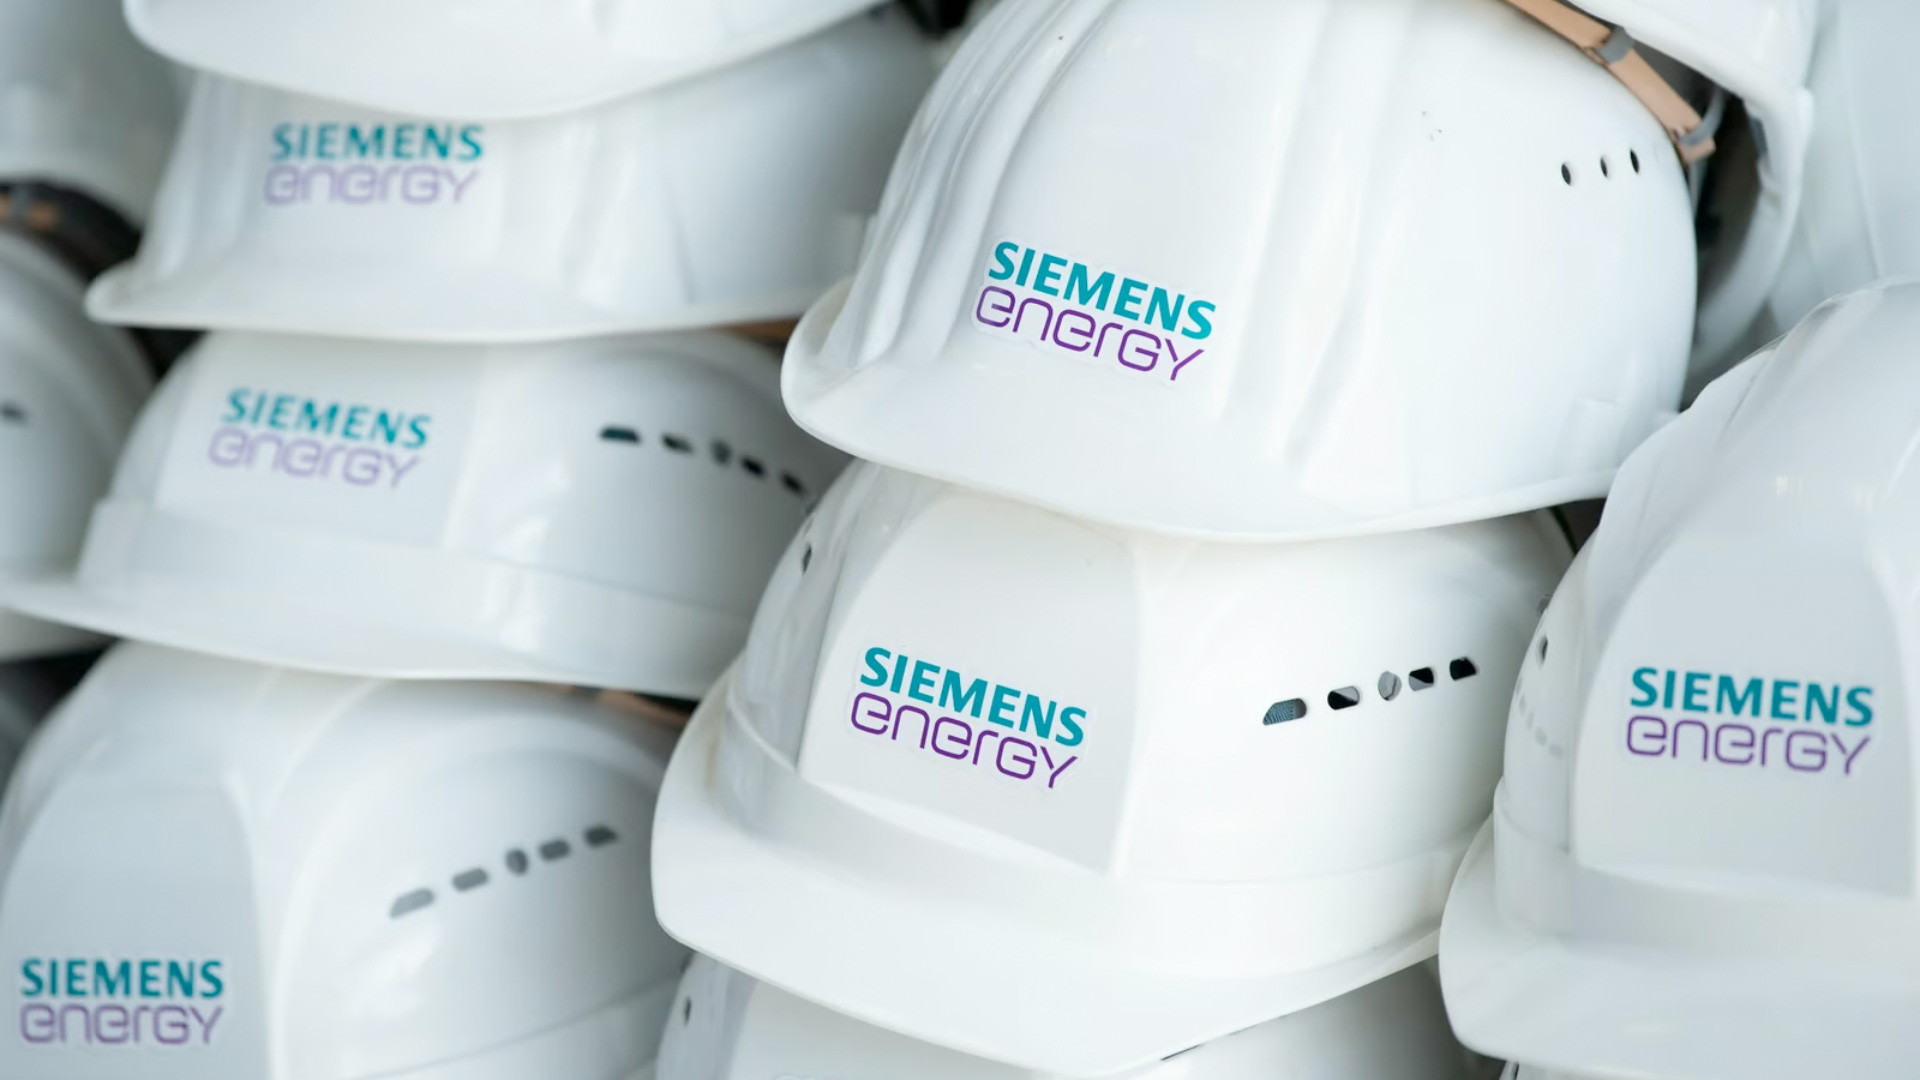 Article Siemens Energy: governance as a success factor in Comp&Ben